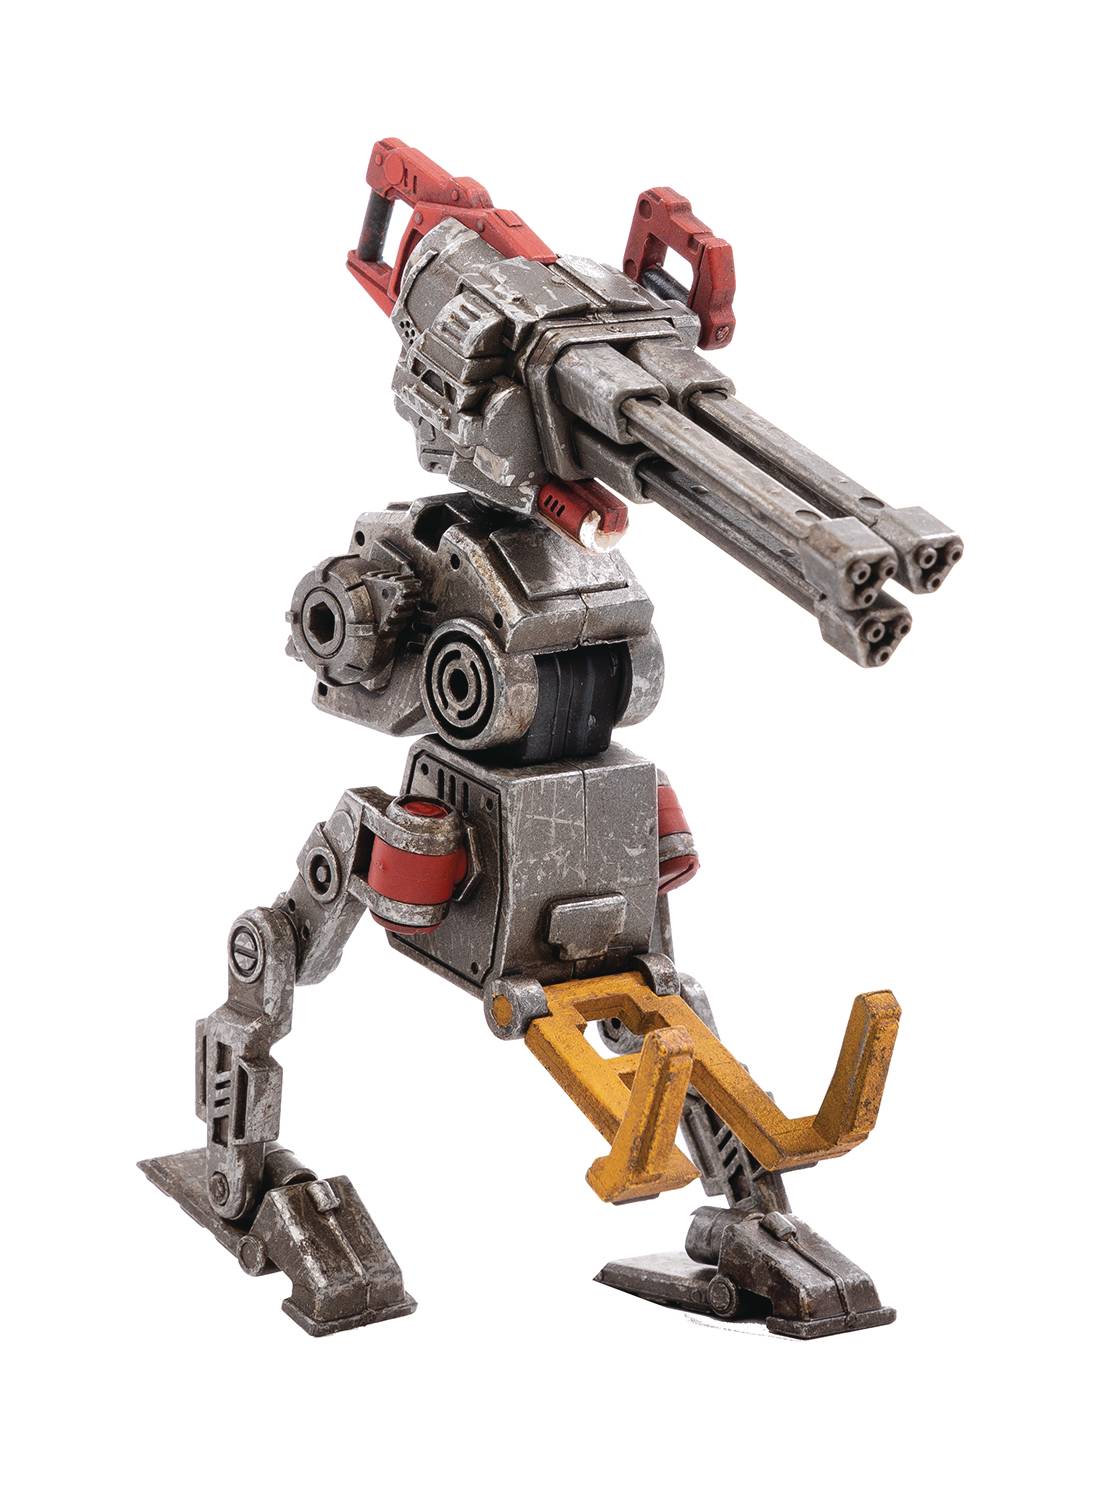 Joy Toy X12 Attack Support Robot Firepower Type Figure